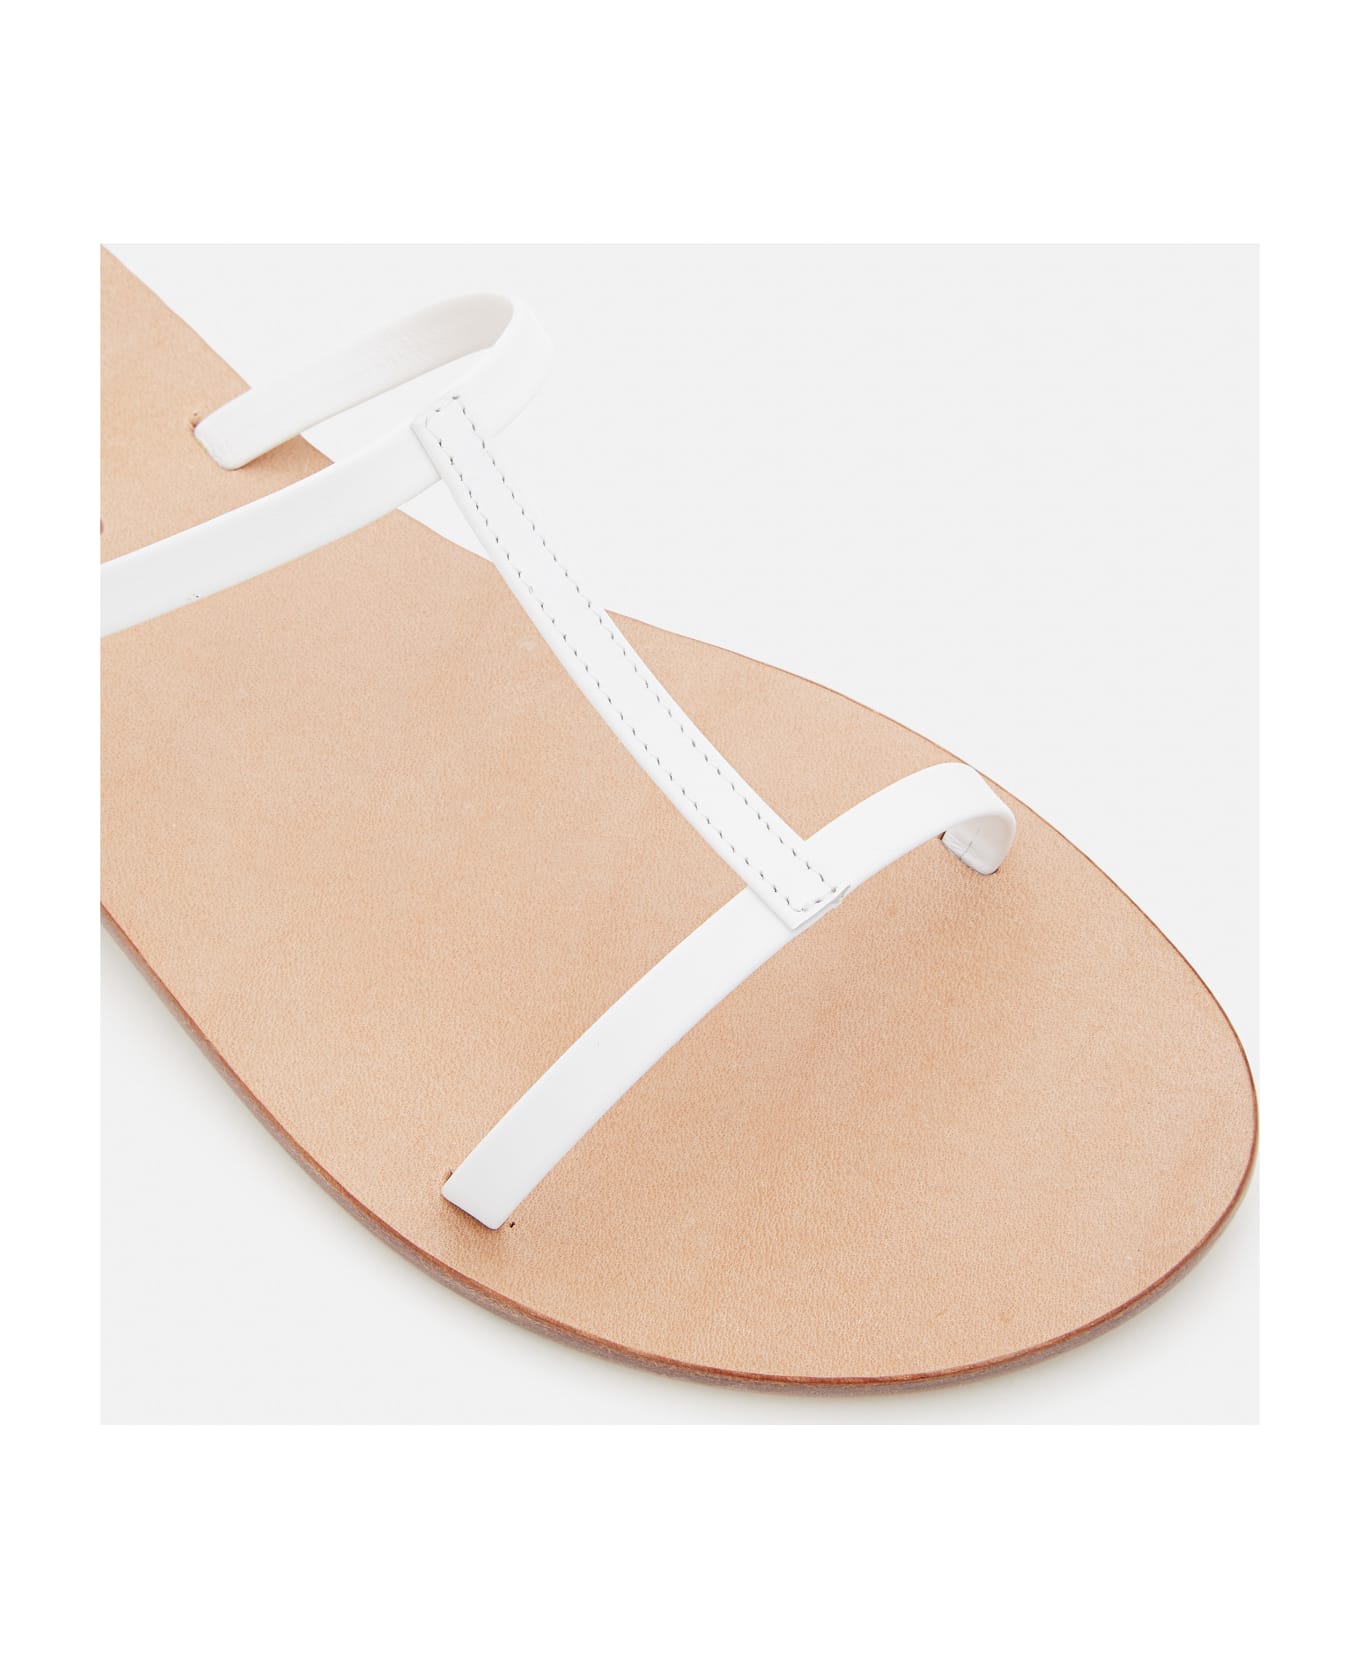 Capri Positano Triple Strap Leather Flat Sandals - White